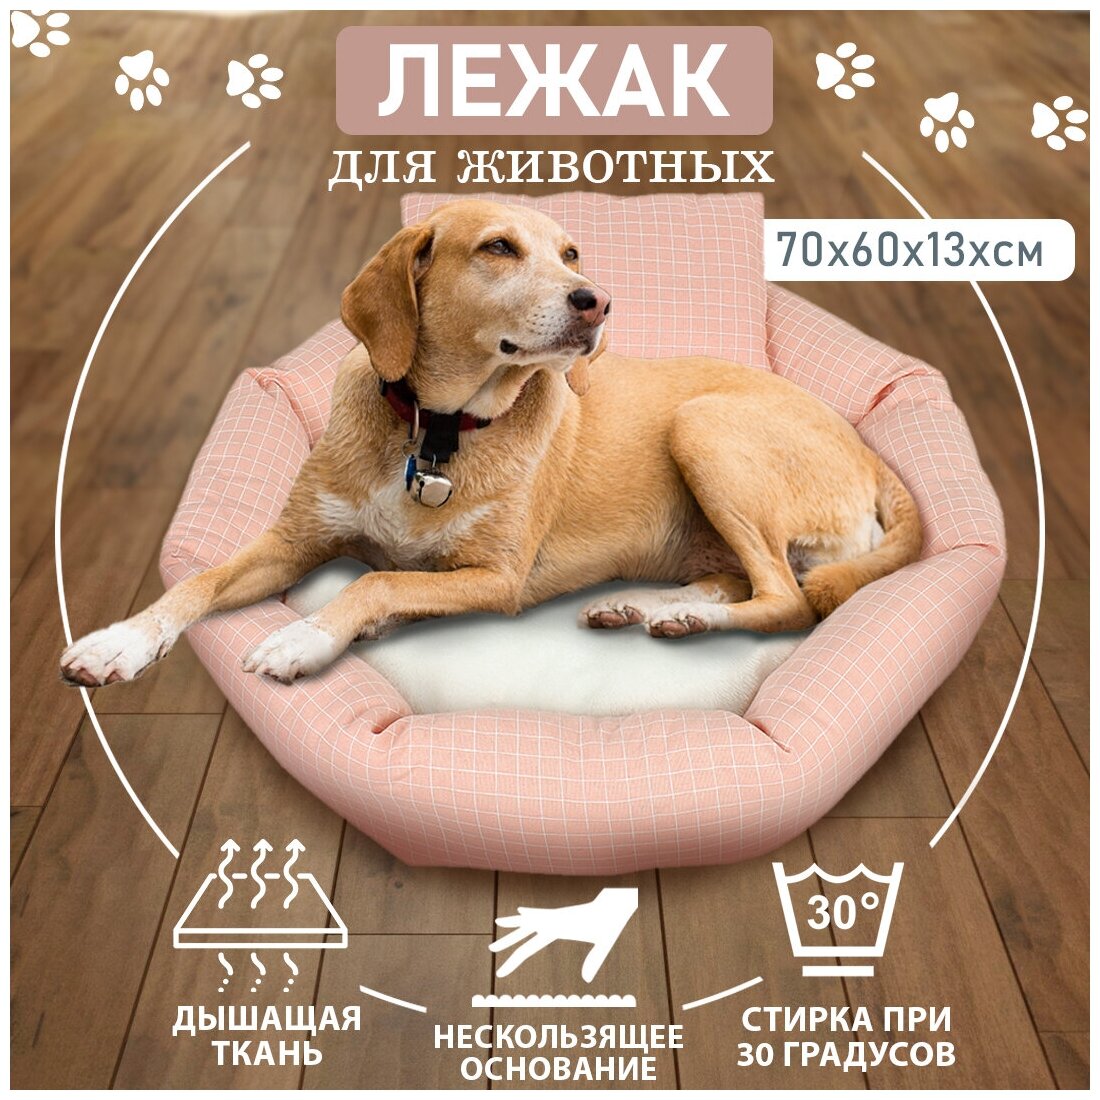 Лежак для собак 70 х 60 х 13 см розового цвета / Лежанка для кошек / Лежак для животных